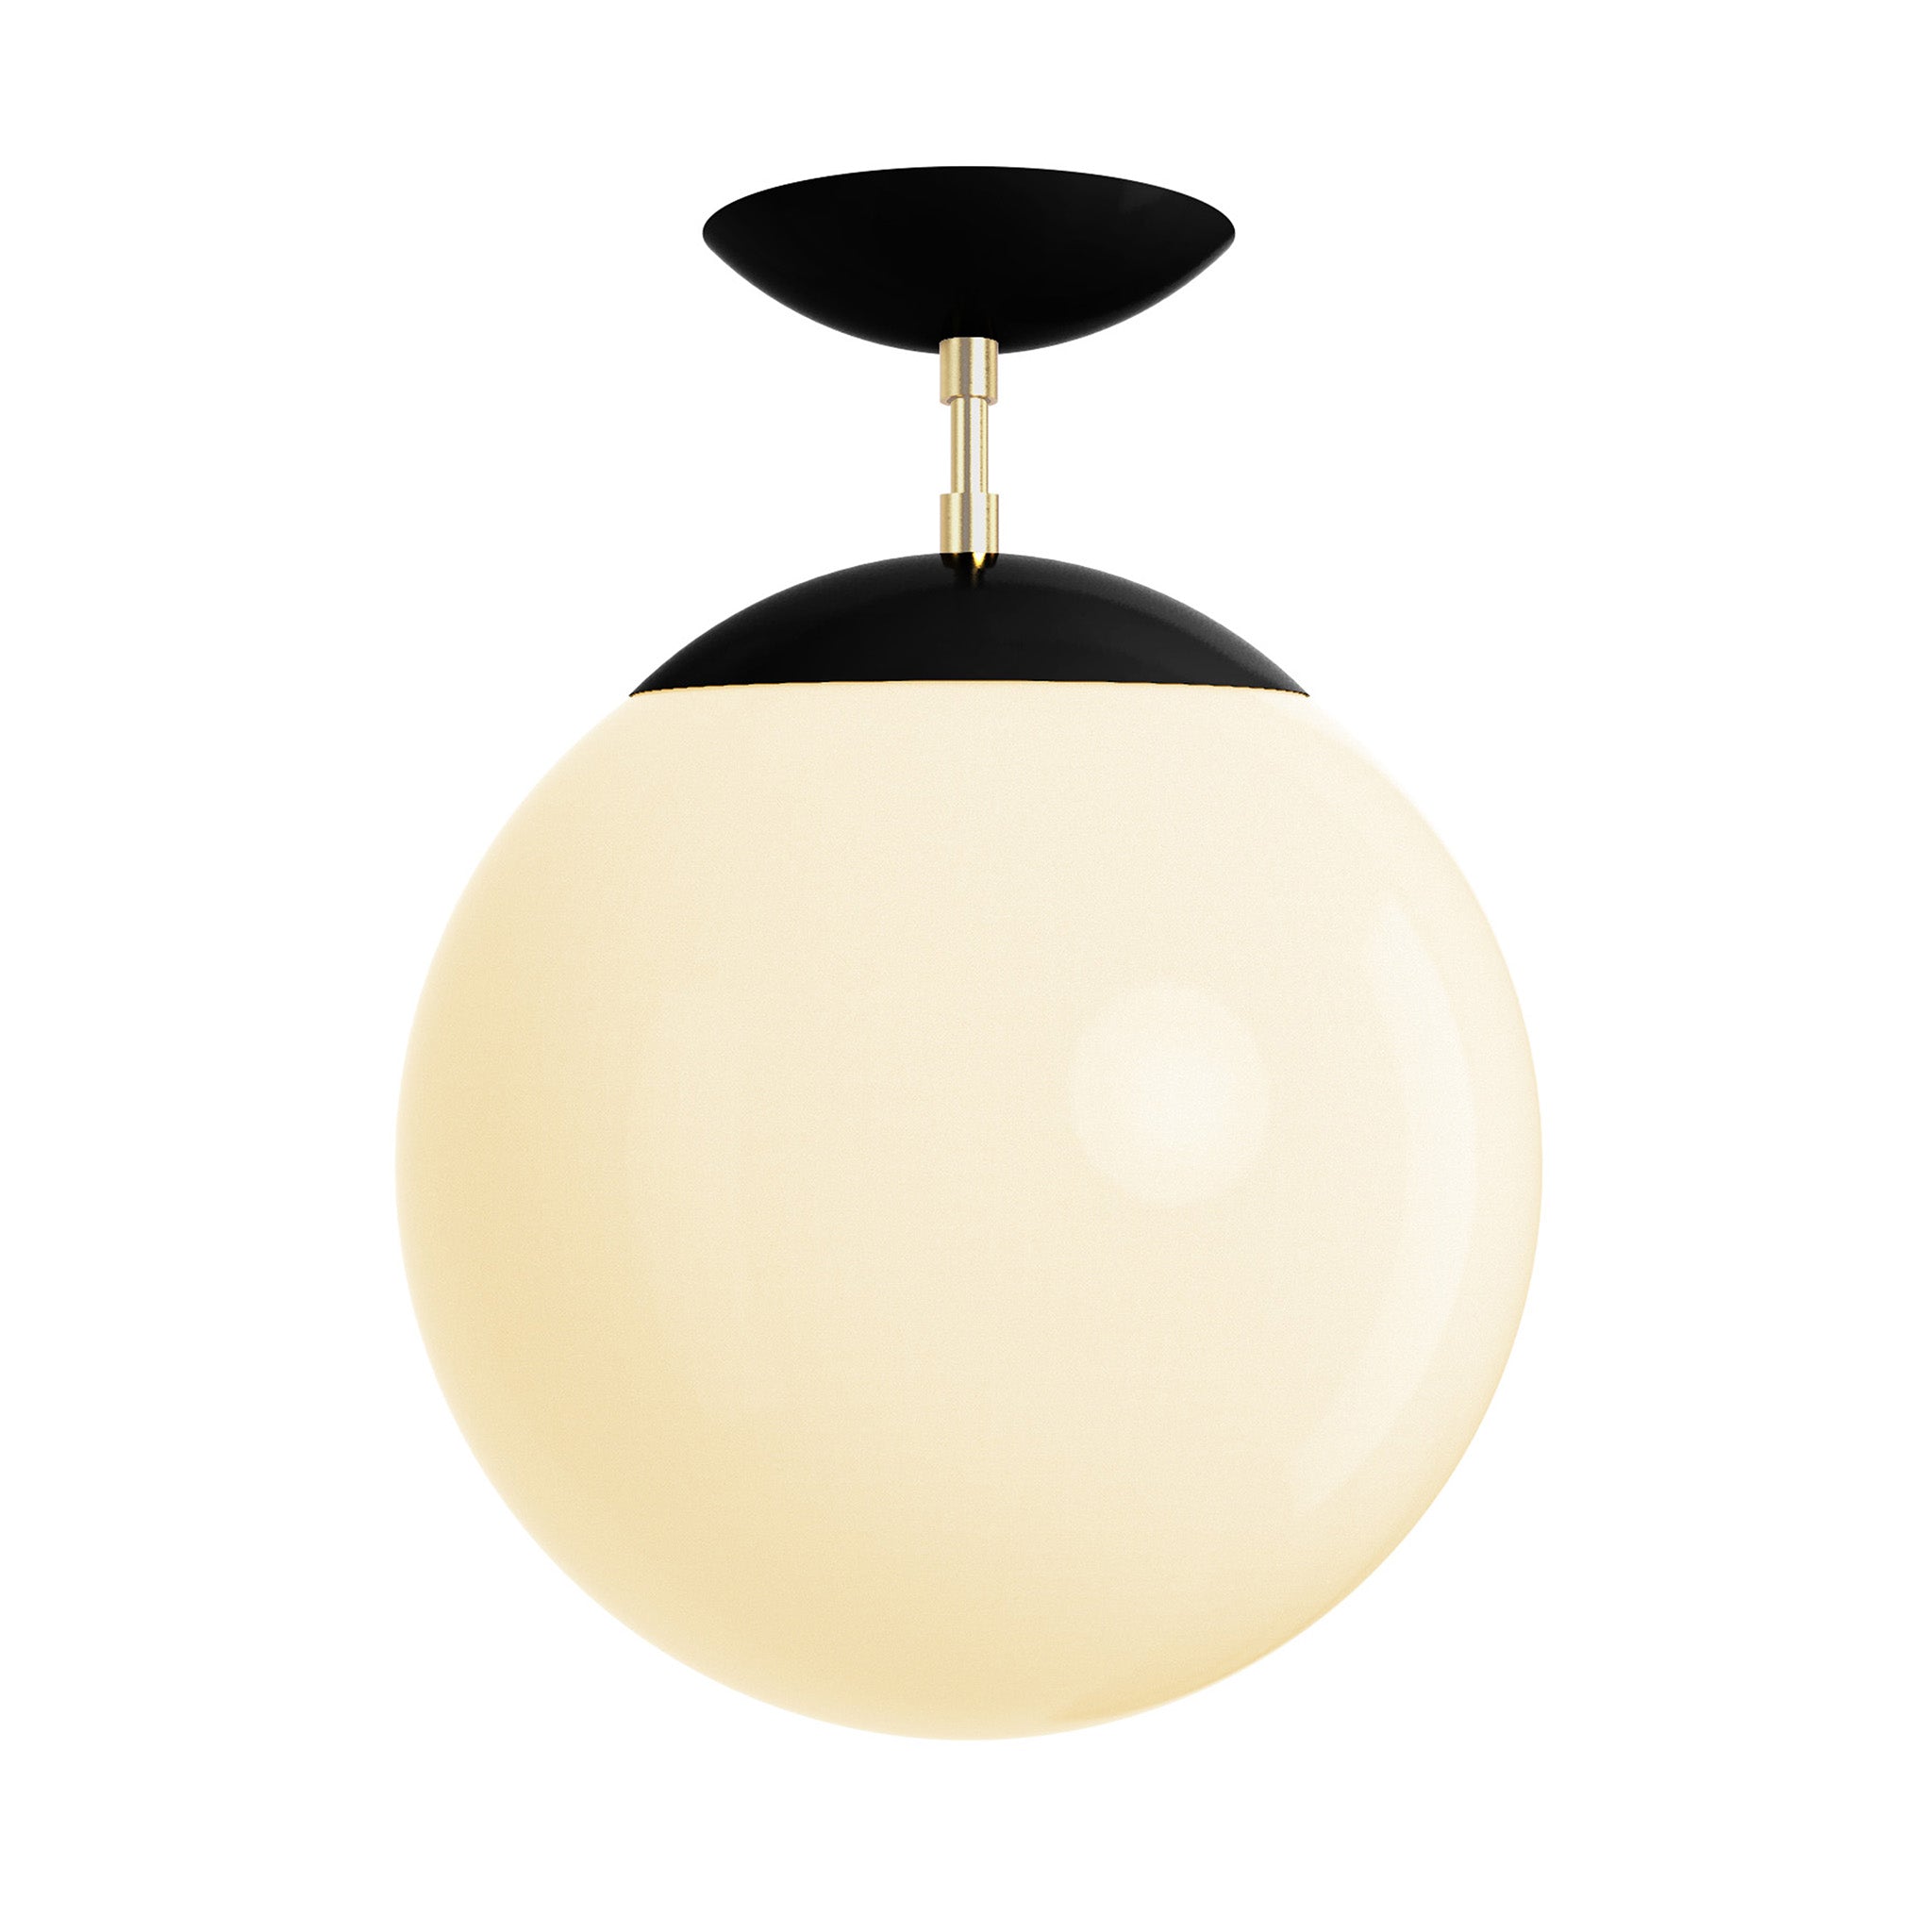 Brass and black cap white globe flush mount 12" dutton brown lighting